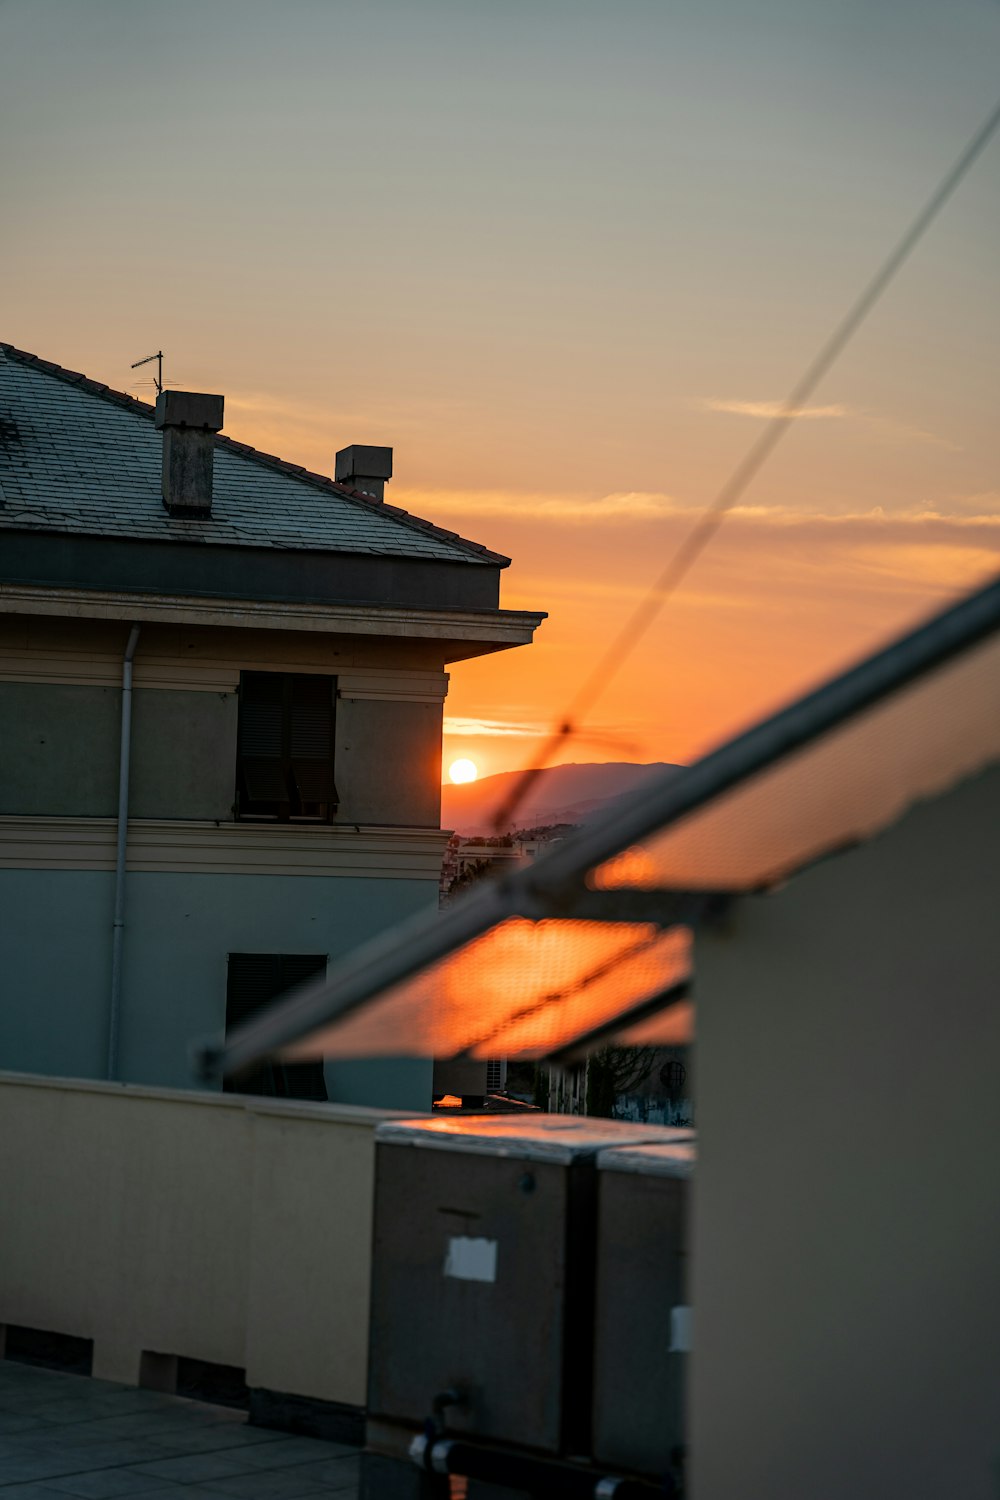 a sunset over a house